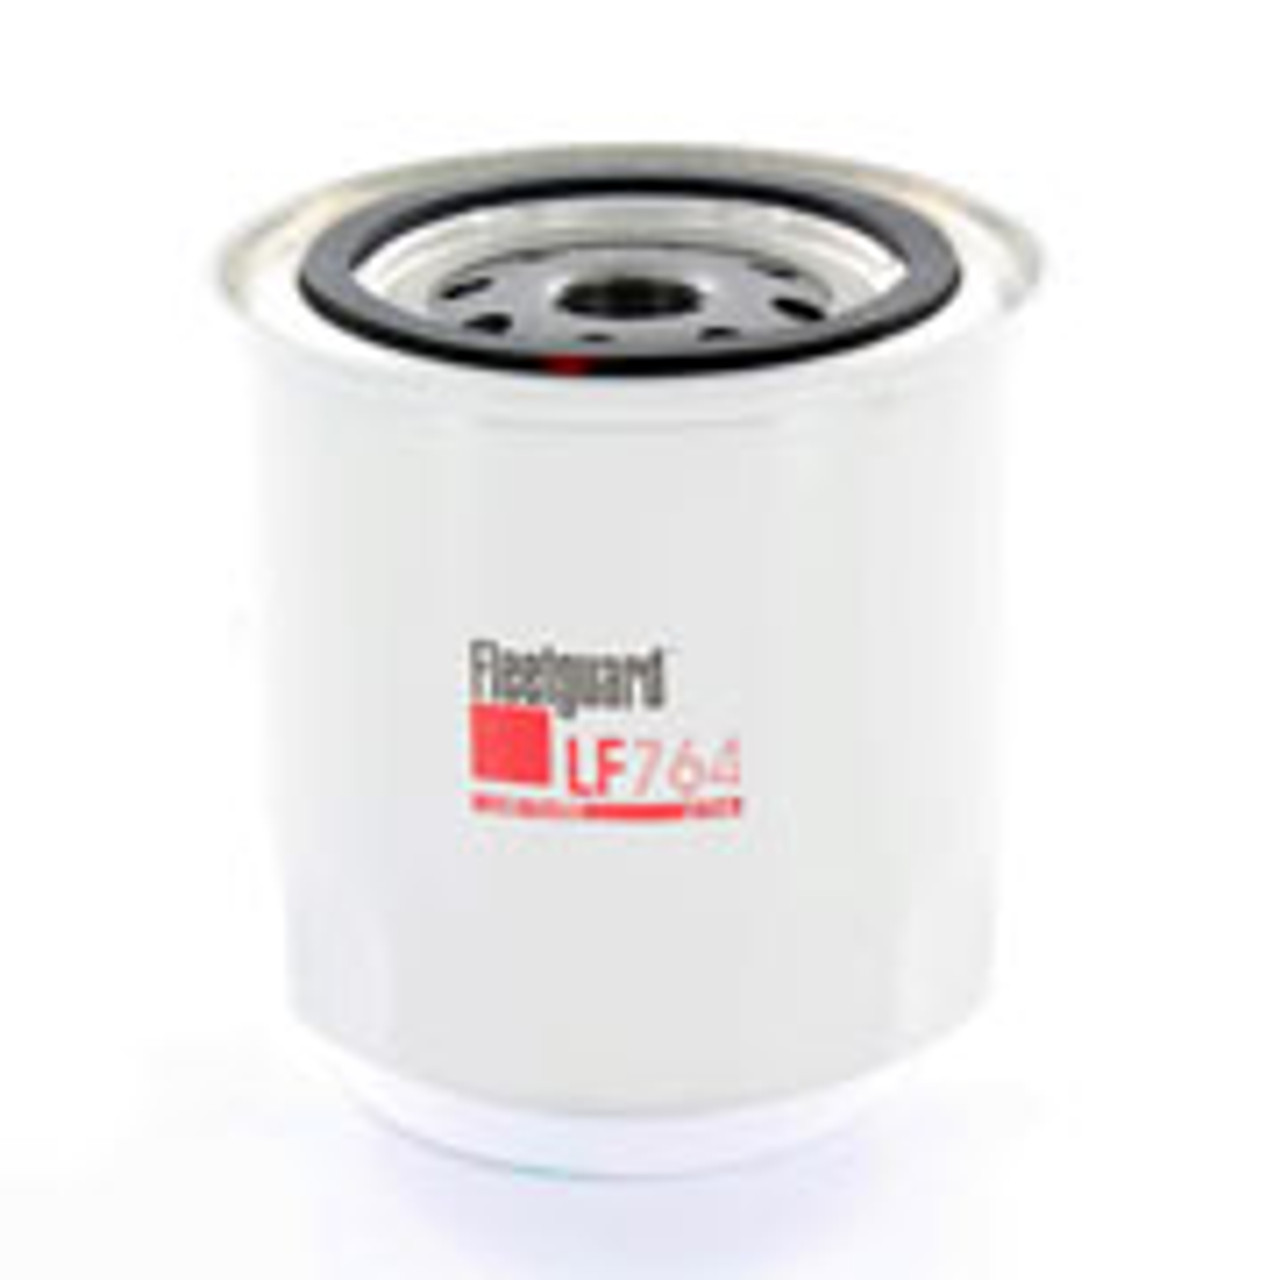 LF764: Fleetguard Spin-On Oil Filter